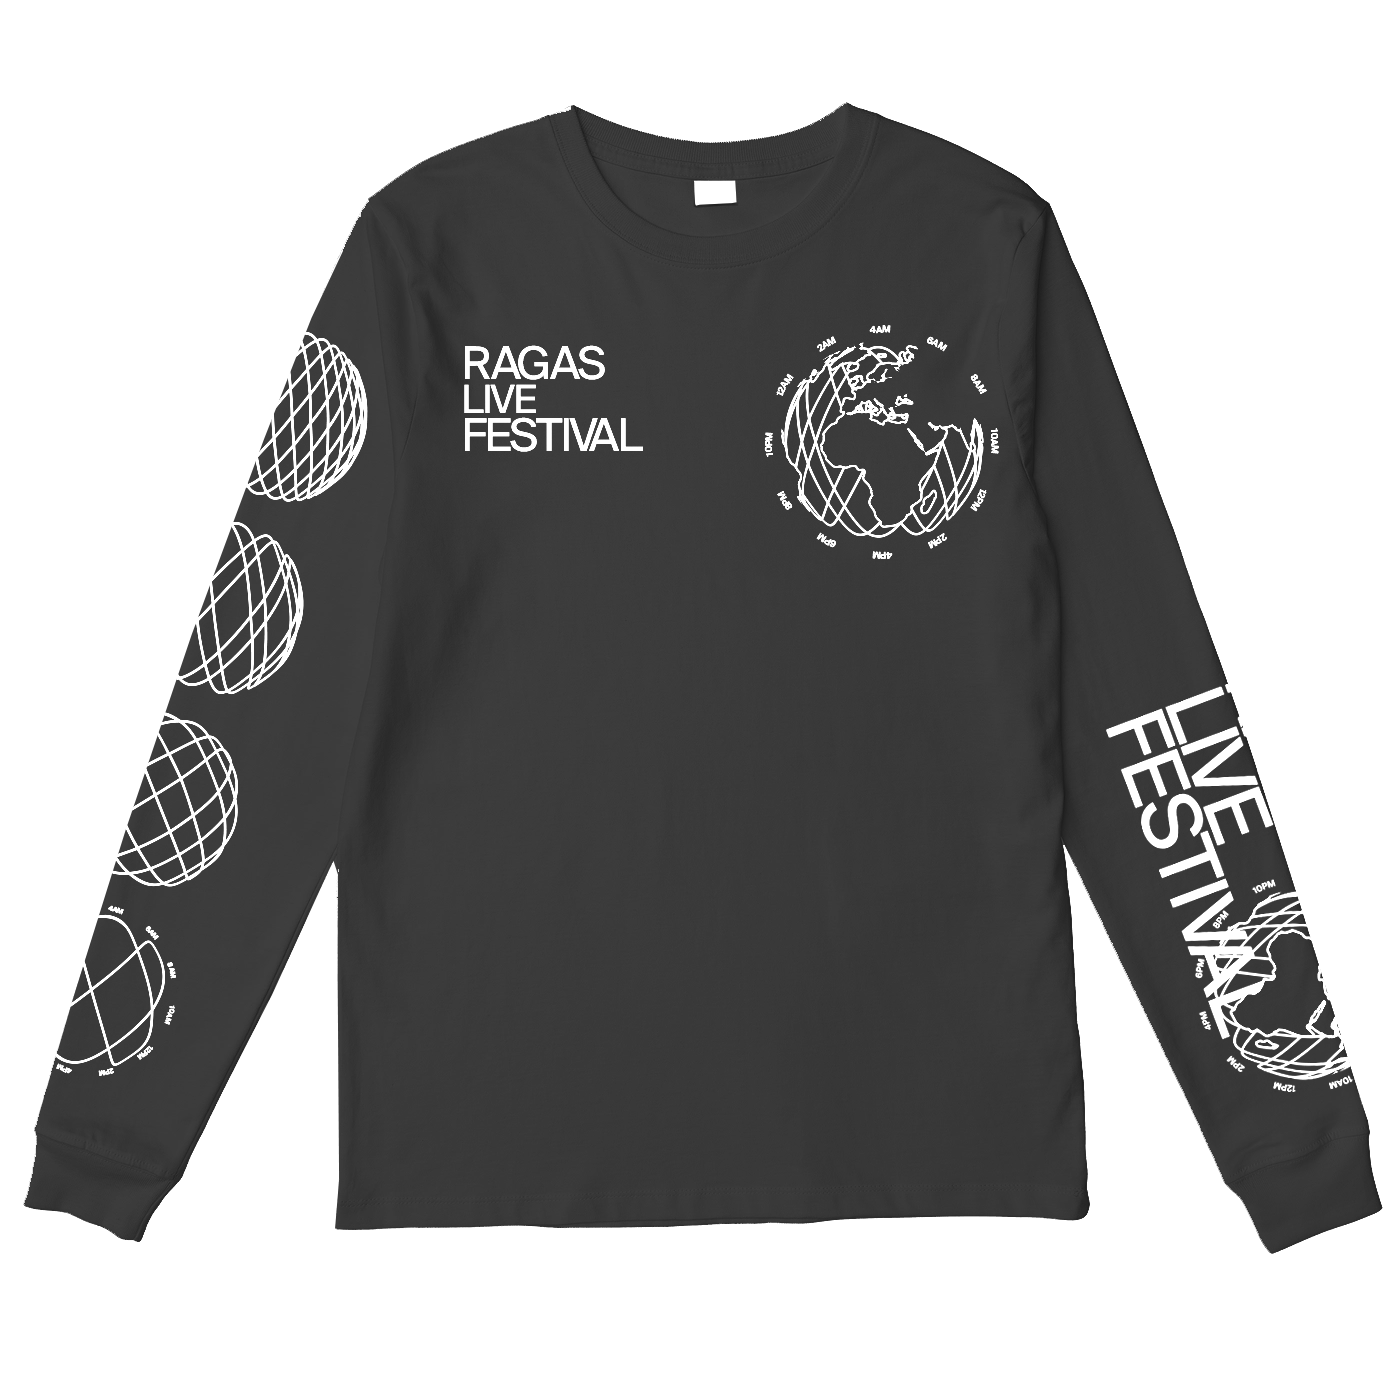 Ragas Live Festival Black Long Sleeve Shirt, 2020